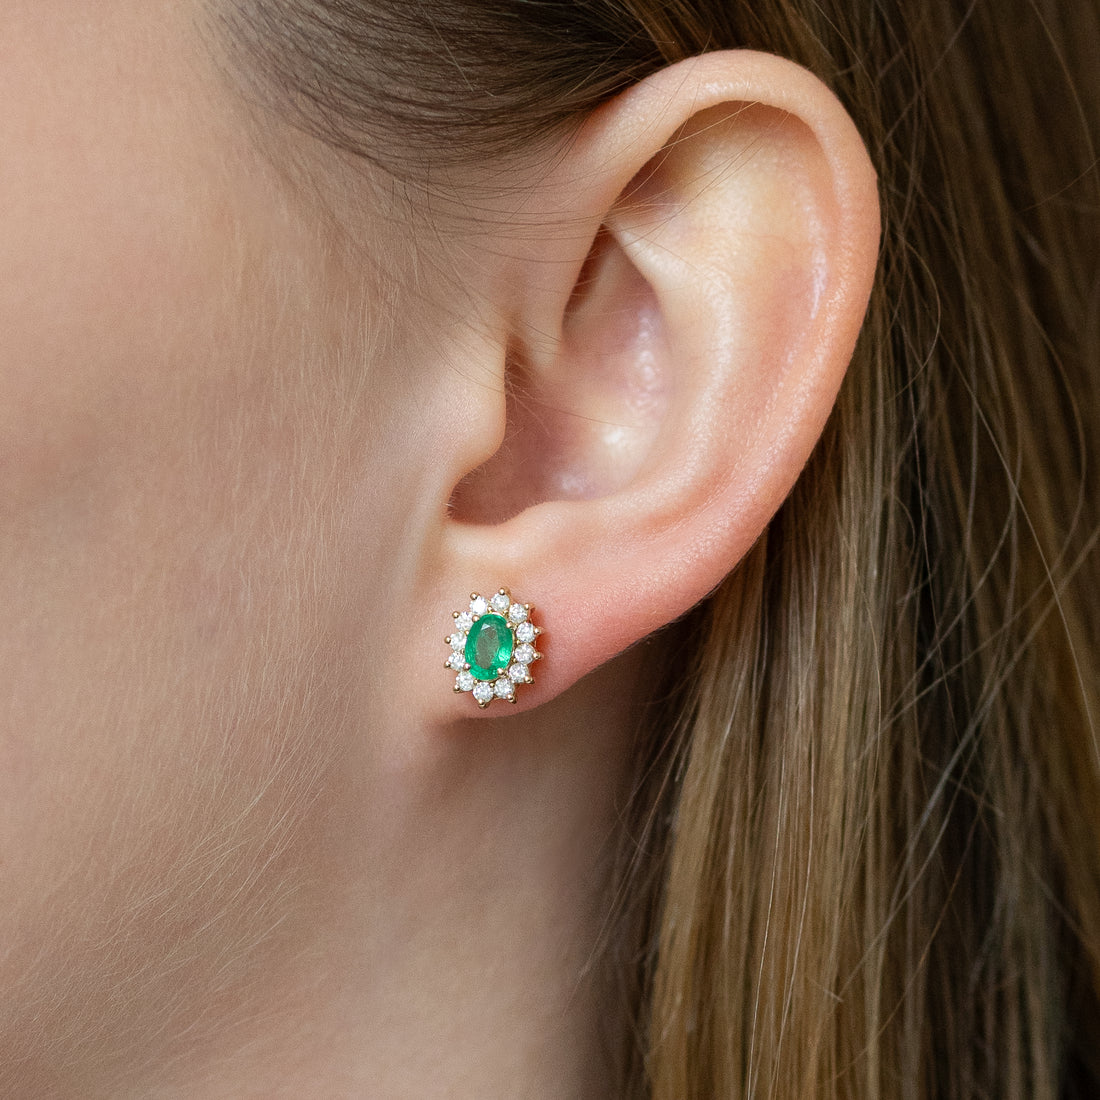 Oval Emerald Earrings with Diamond Halo